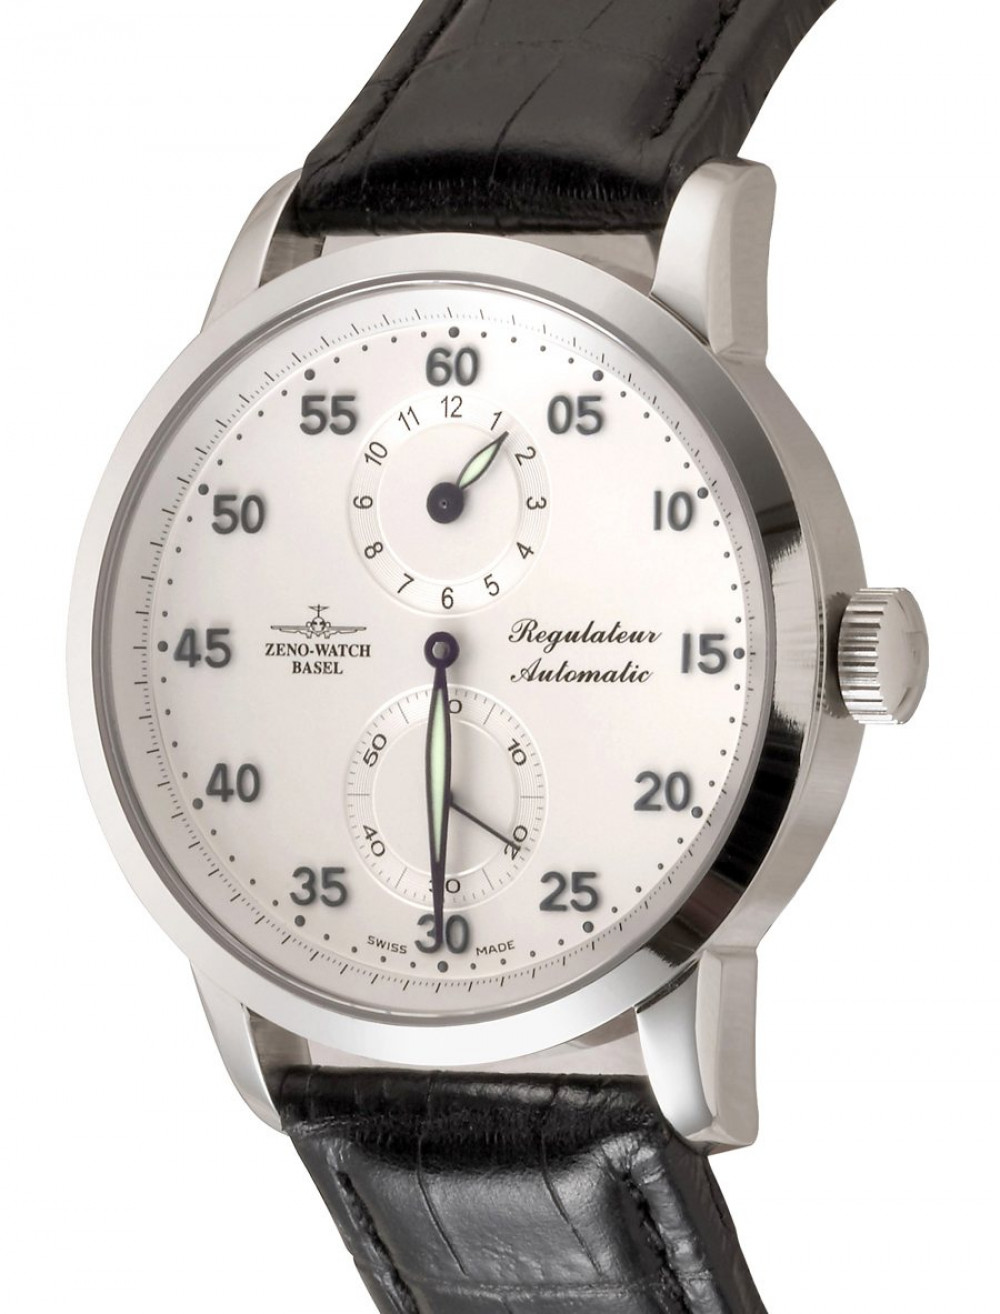 Zegarek firmy Zeno-Watch Basel, model Regulator Retro schwarz